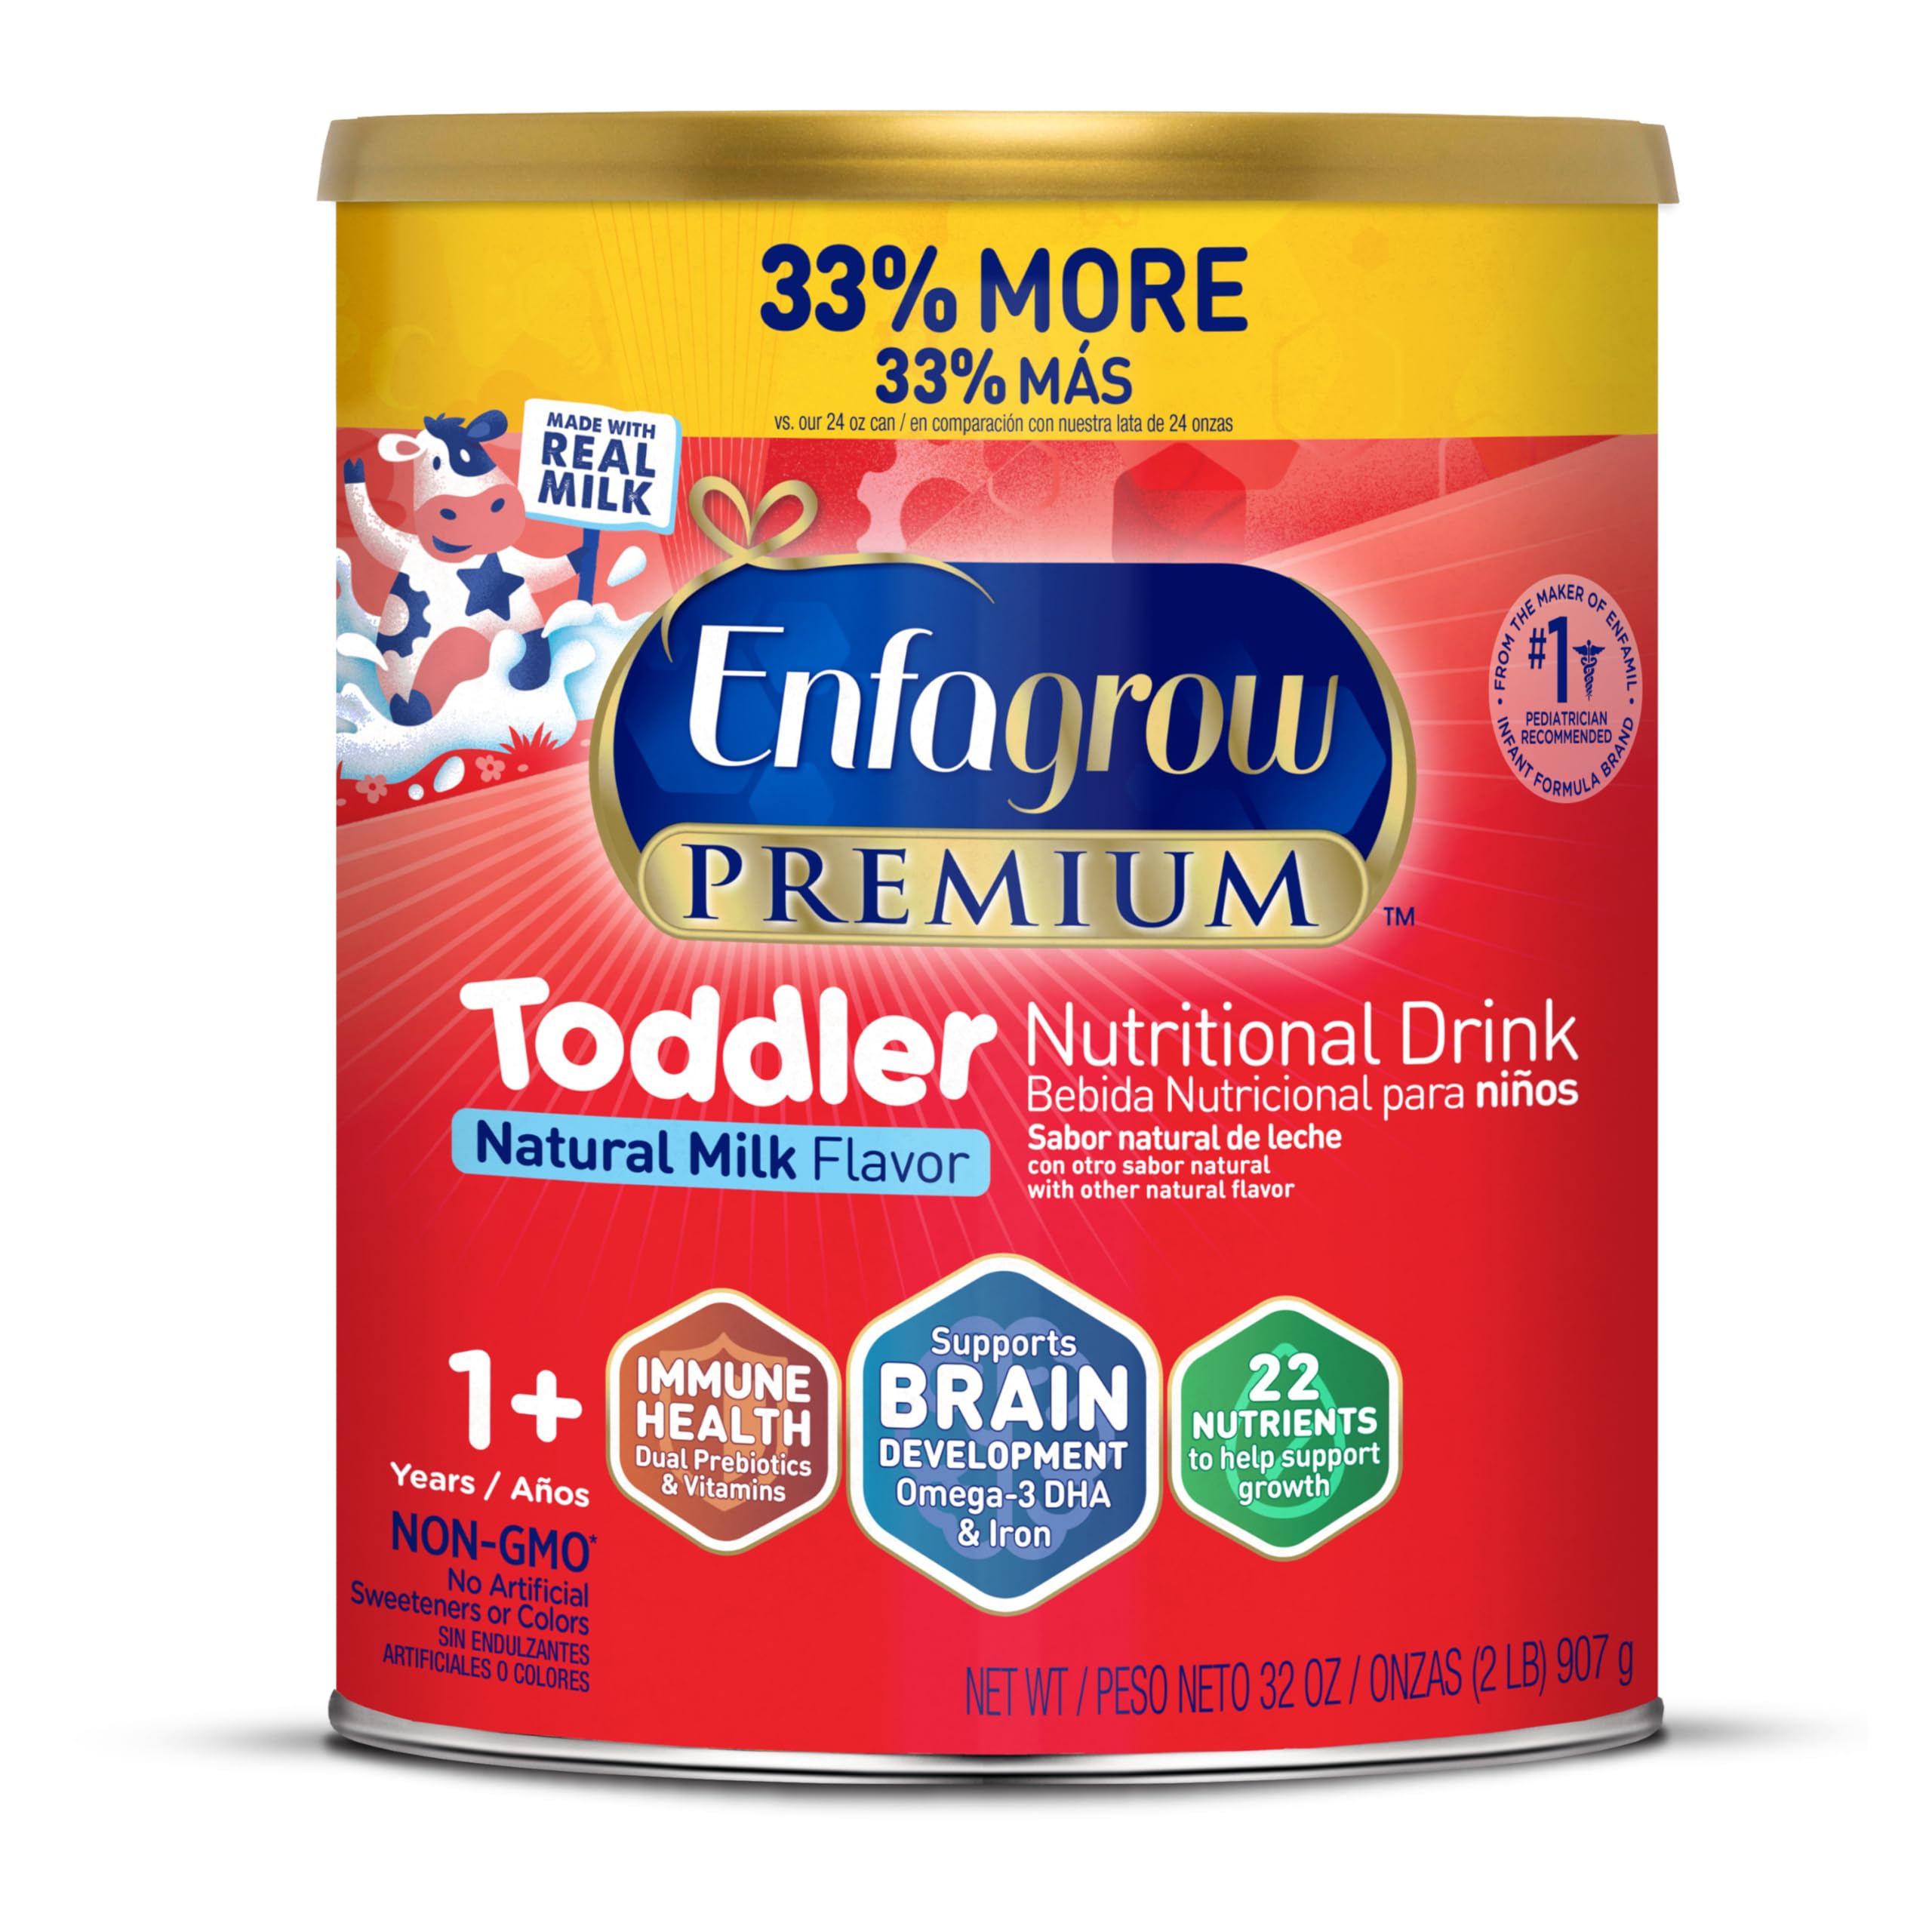 Enfagrow PREMIUM Toddler Nutritional Drink, Natural Milk Flavor, Omega-3 DHA for Brain Support, Prebiotics & Vitamins for Immune Health, Non-GMO, Powder Can, 32 Oz